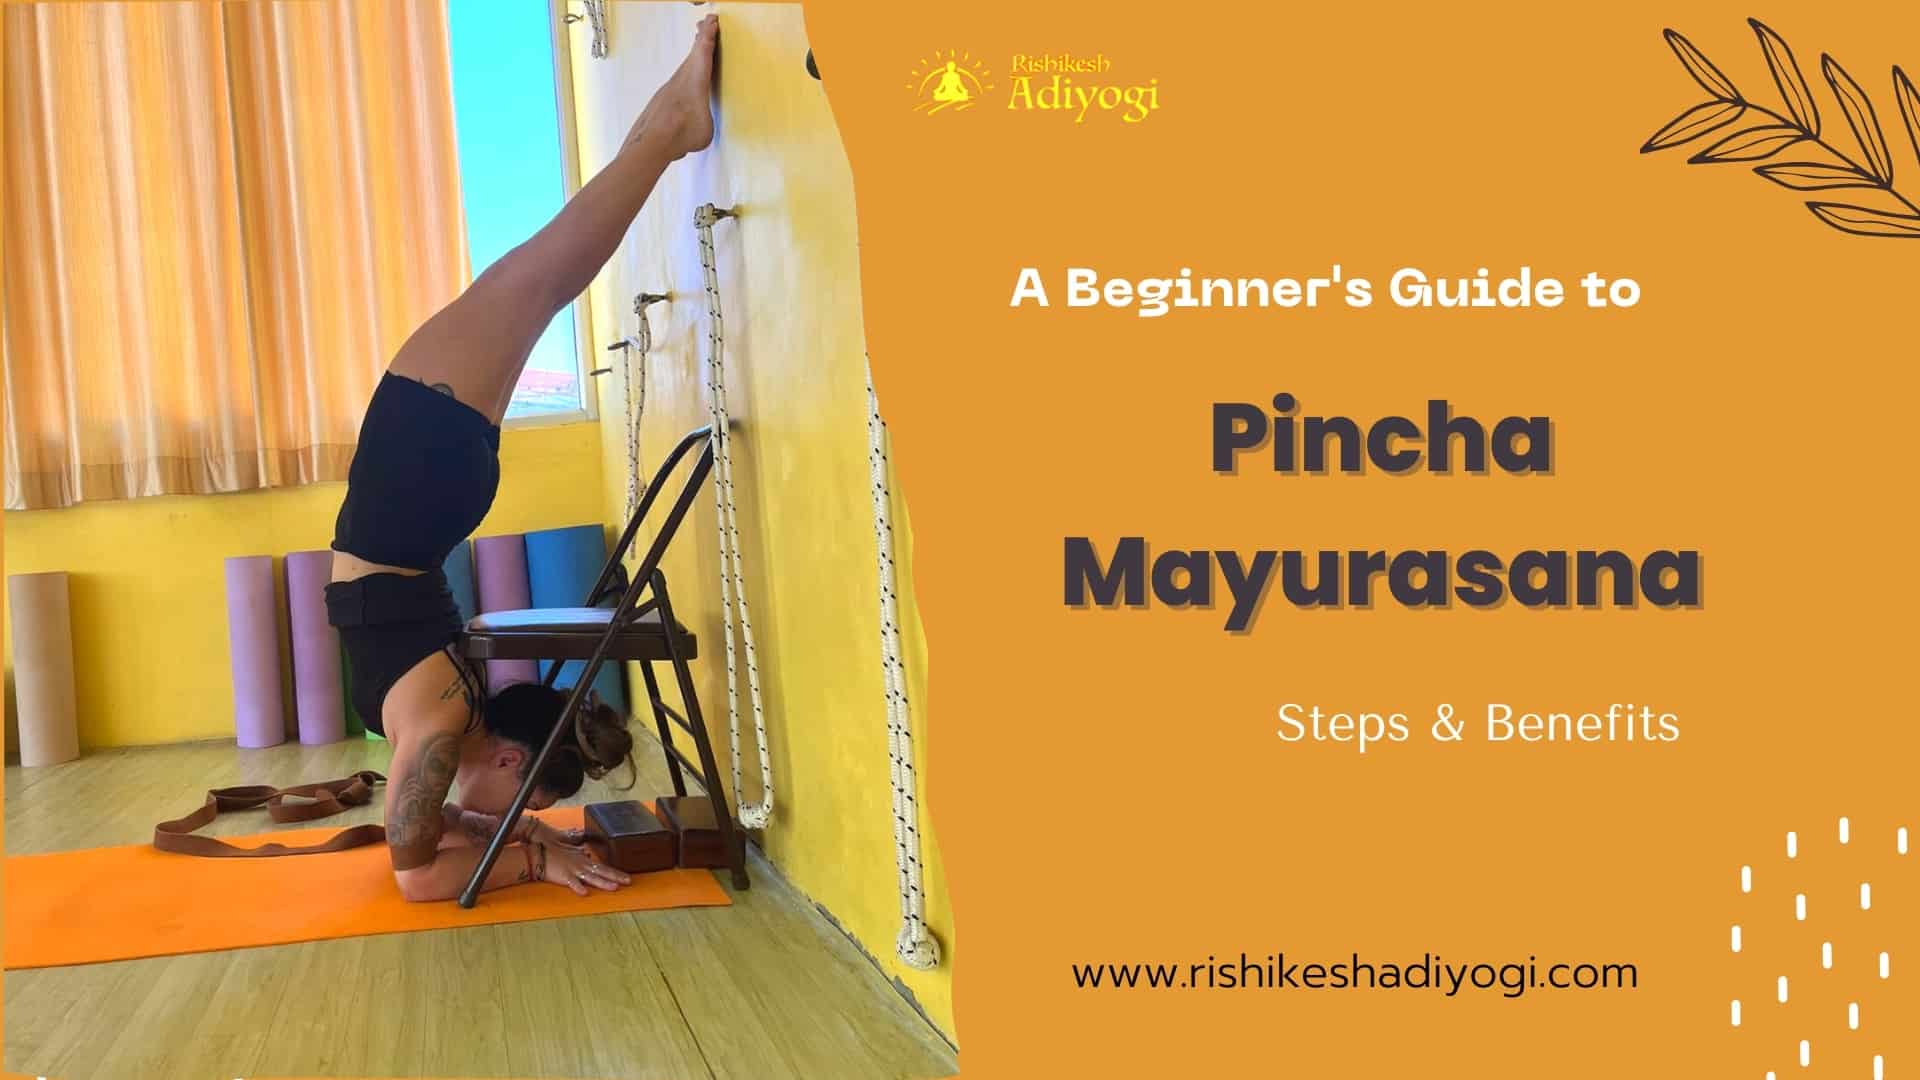 A Beginner's Guide to Pincha Mayurasana Steps & Benefits